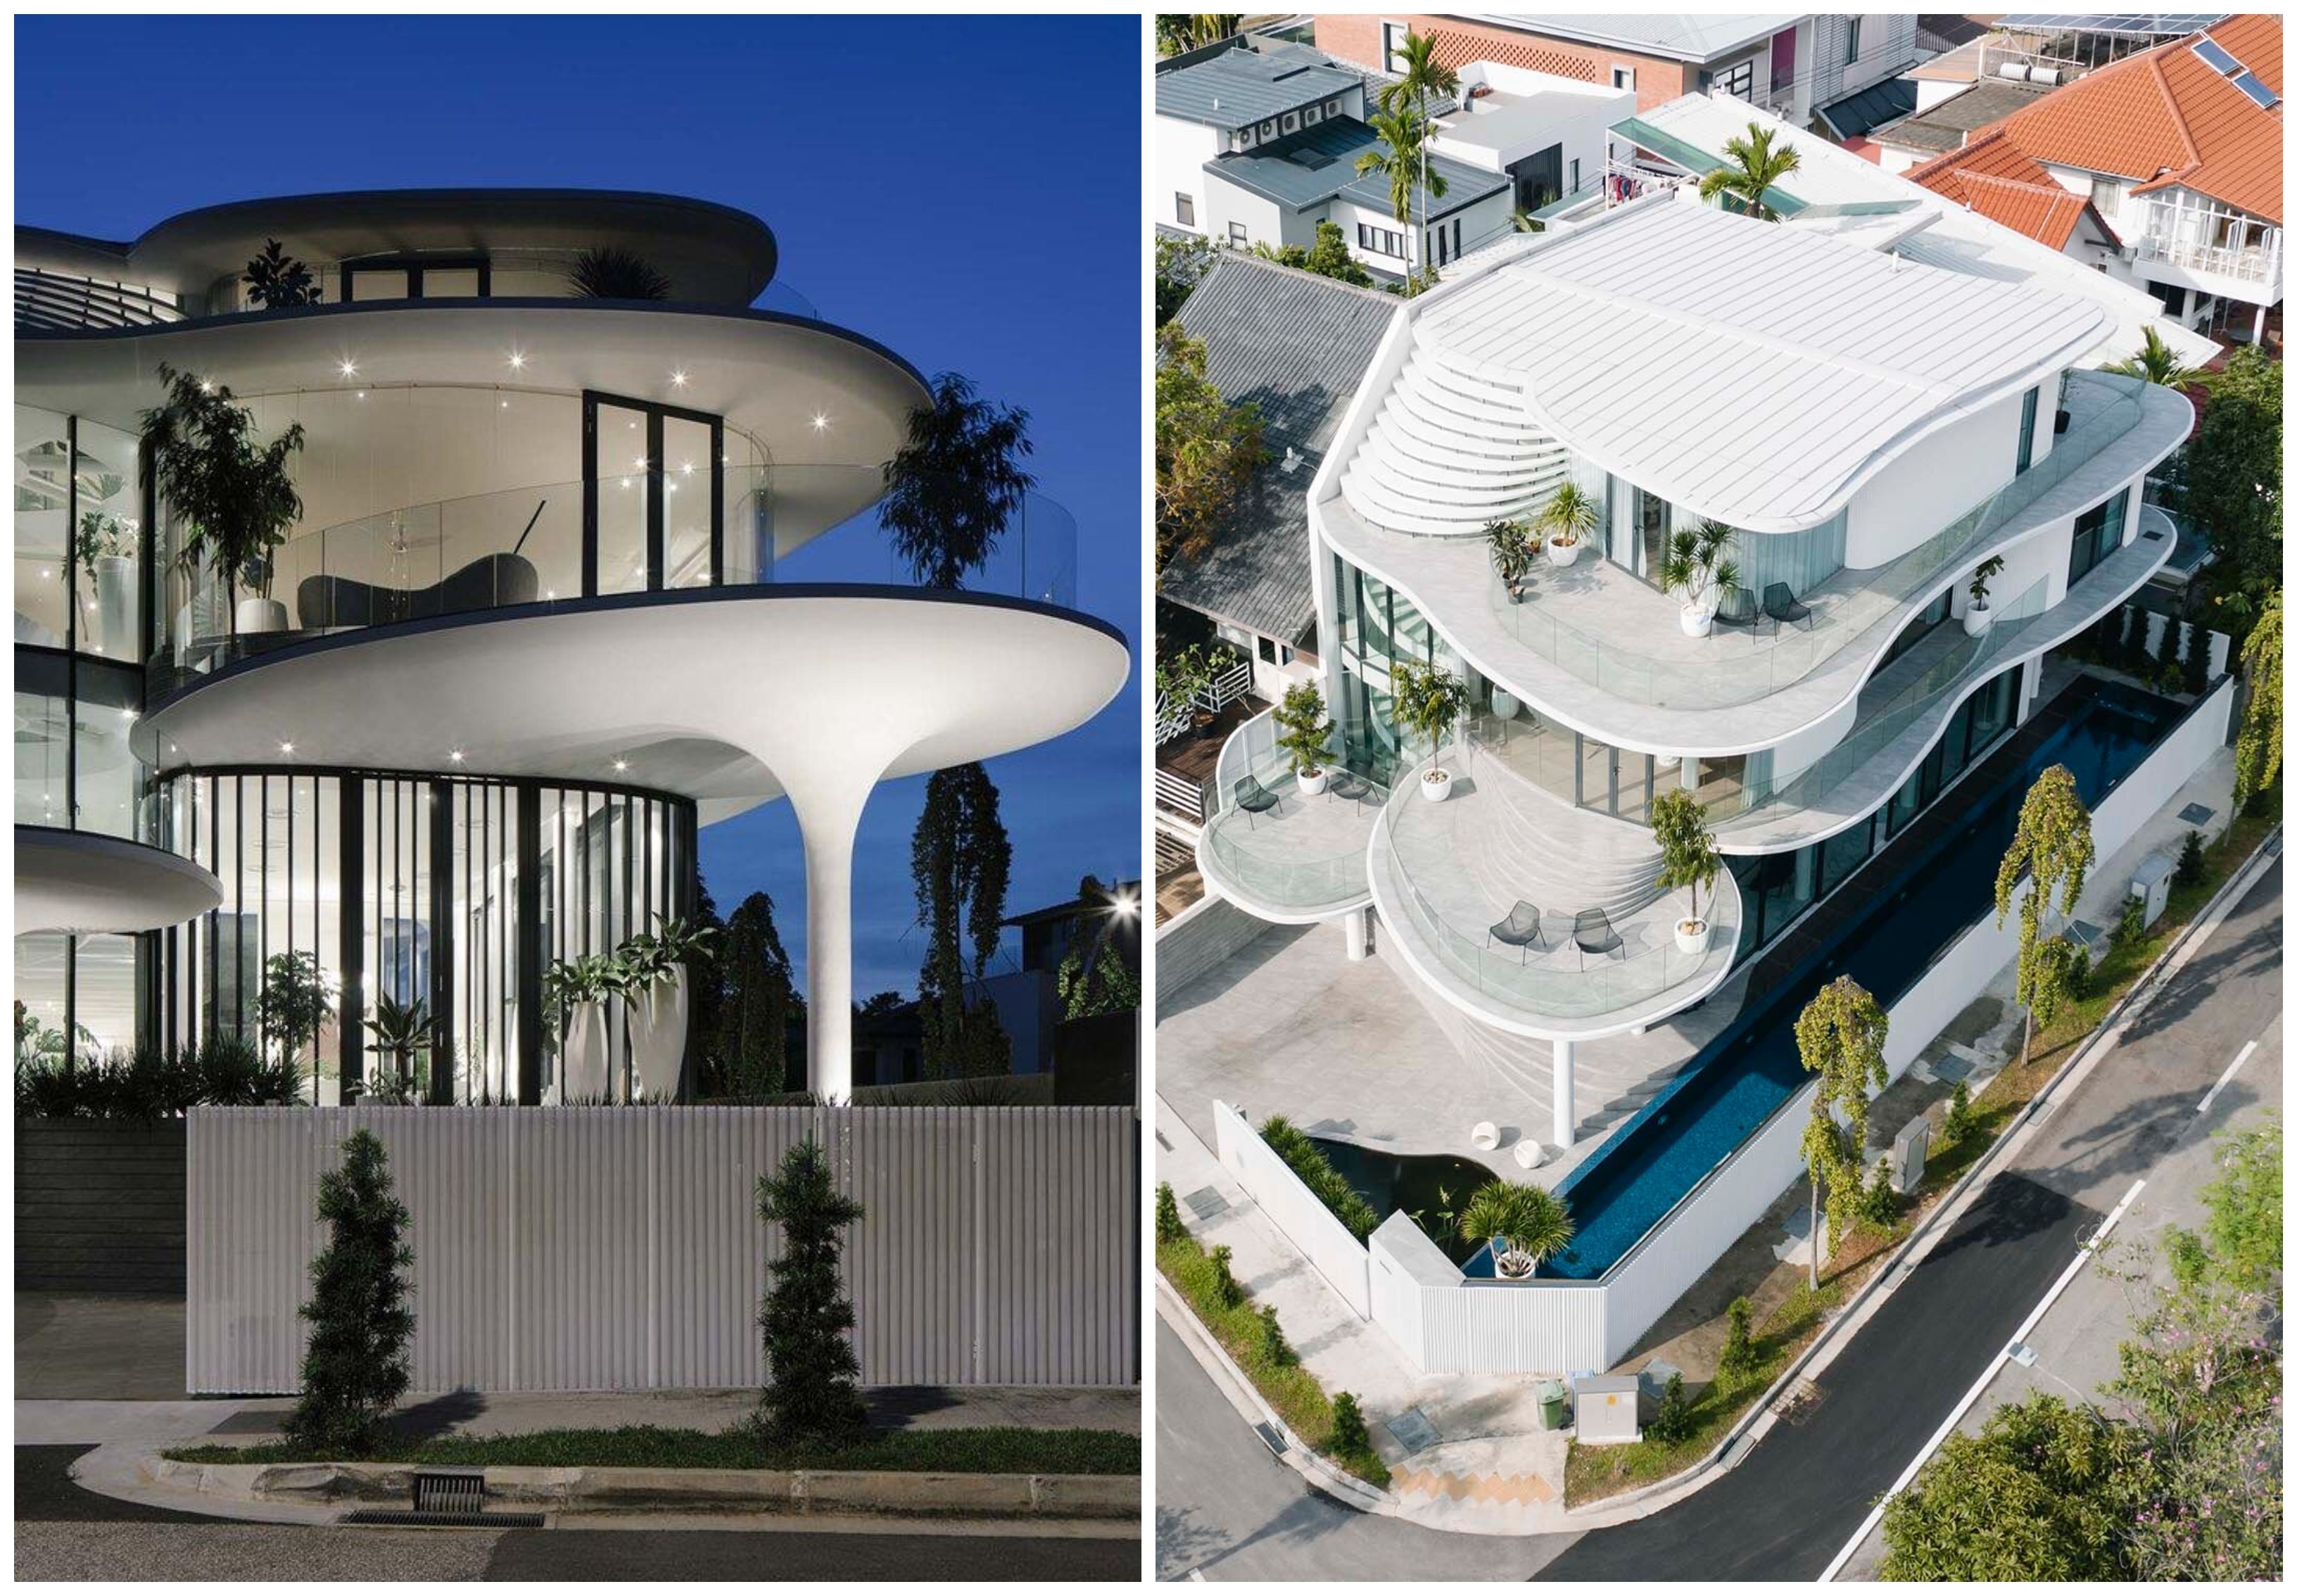 Is Stiletto House Singapore’s coolest mansion? Photo: EKHA Studio